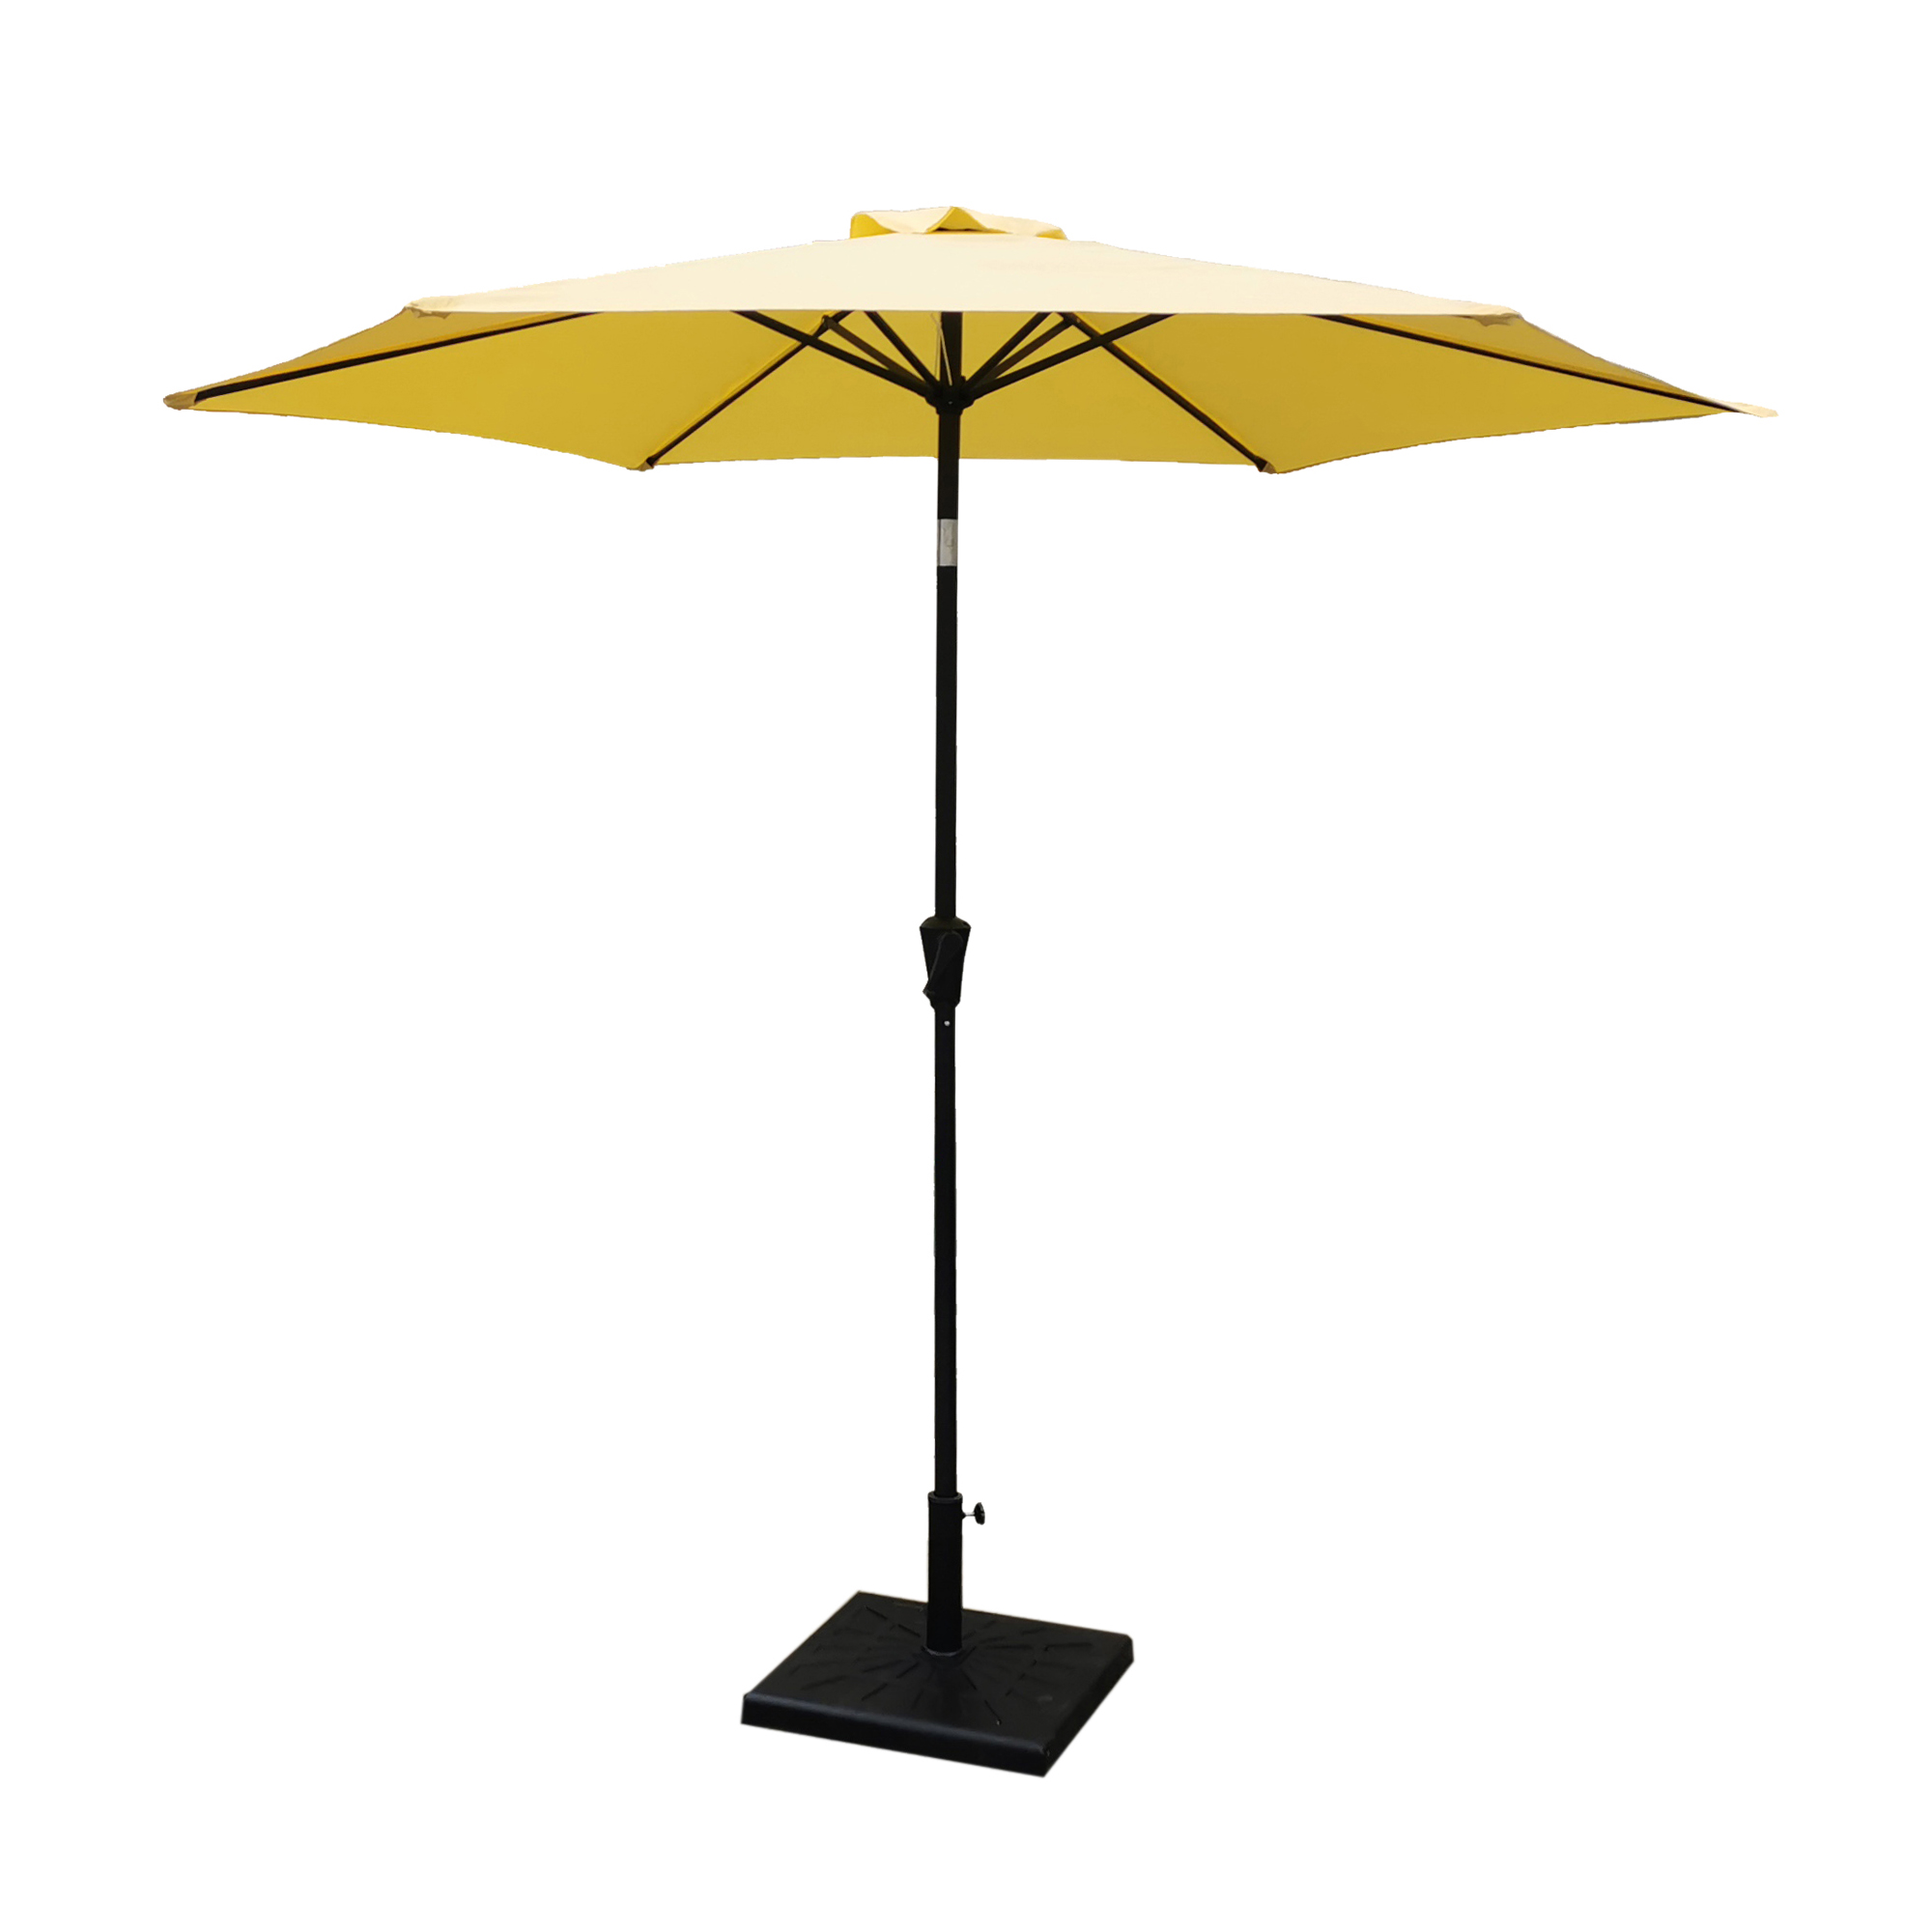 8.8 feet Outdoor Aluminum Patio Umbrella, Patio Umbrella, Market Umbrella with 42 Pound Square Resin Umbrella Base, Push Button Tilt and Crank lift, Yellow